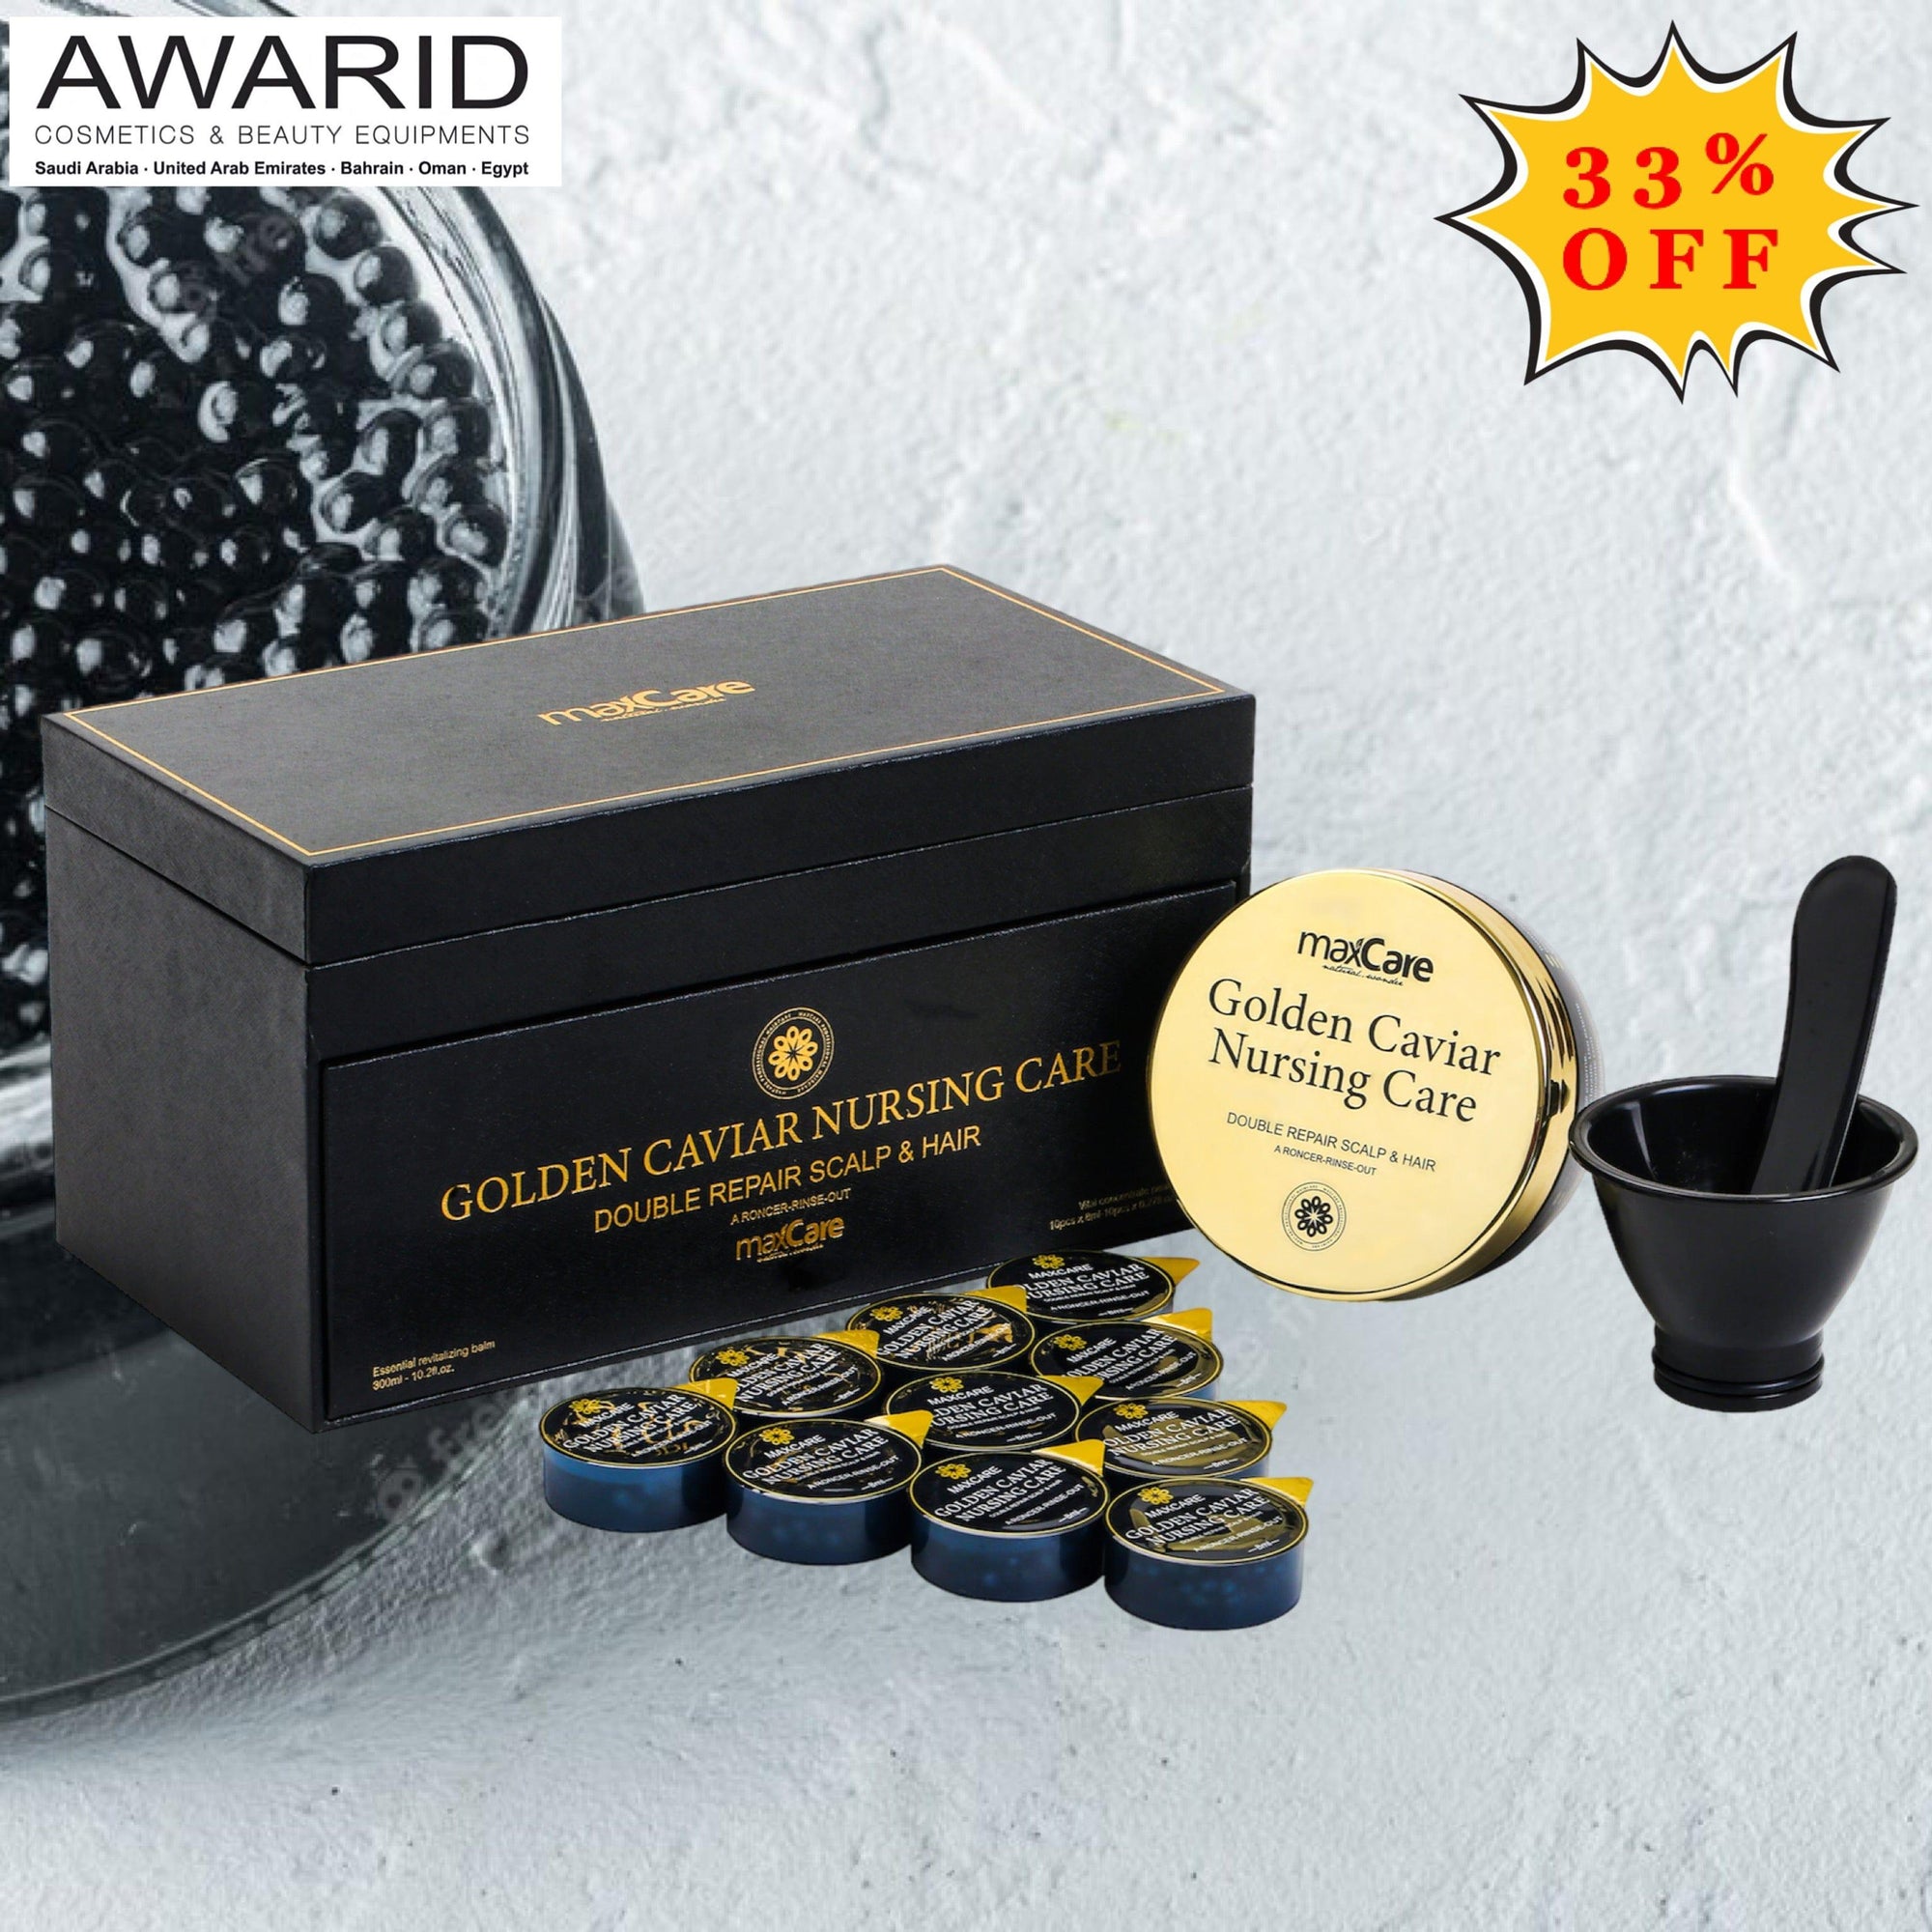 Maxcare Golden Caviar Nursing Care Double Repair Scalp Care